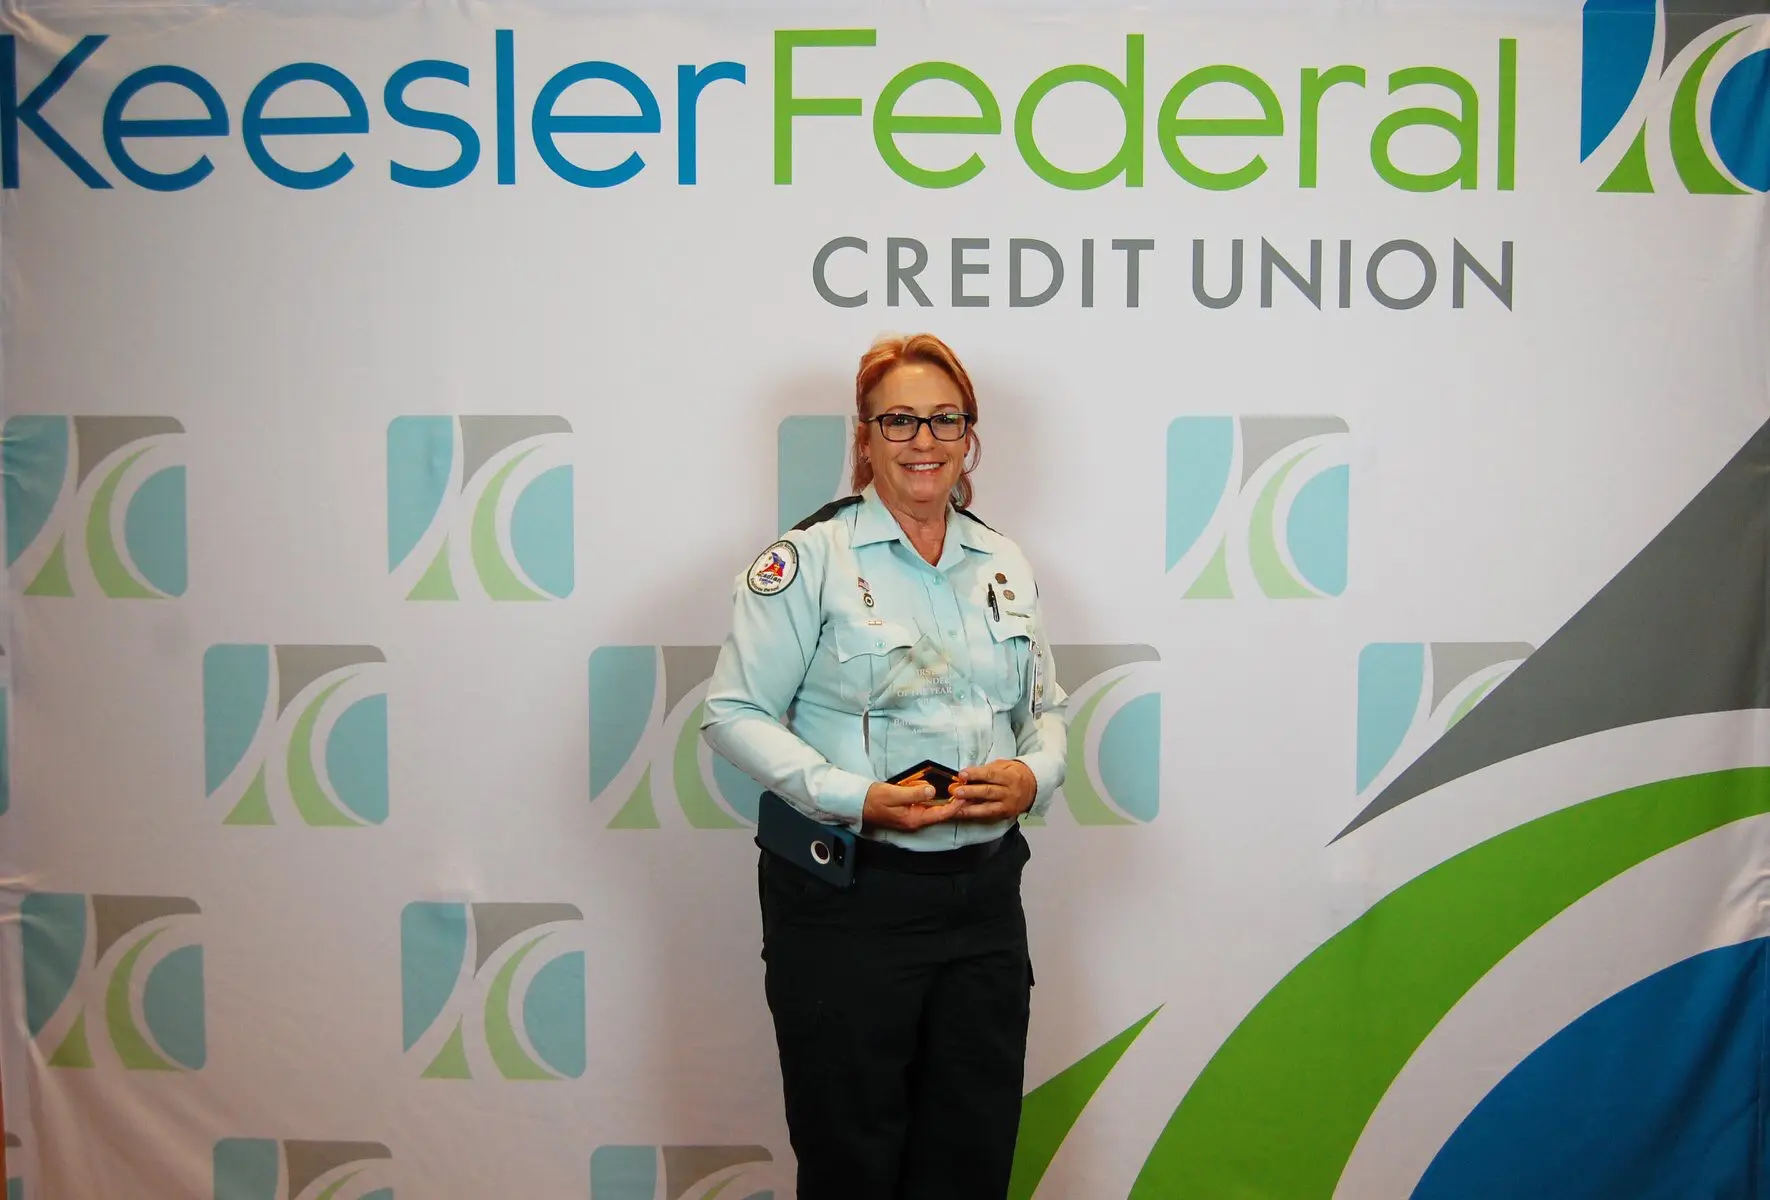 Acadian honored at Keesler Federal Credit Union first responders dinner